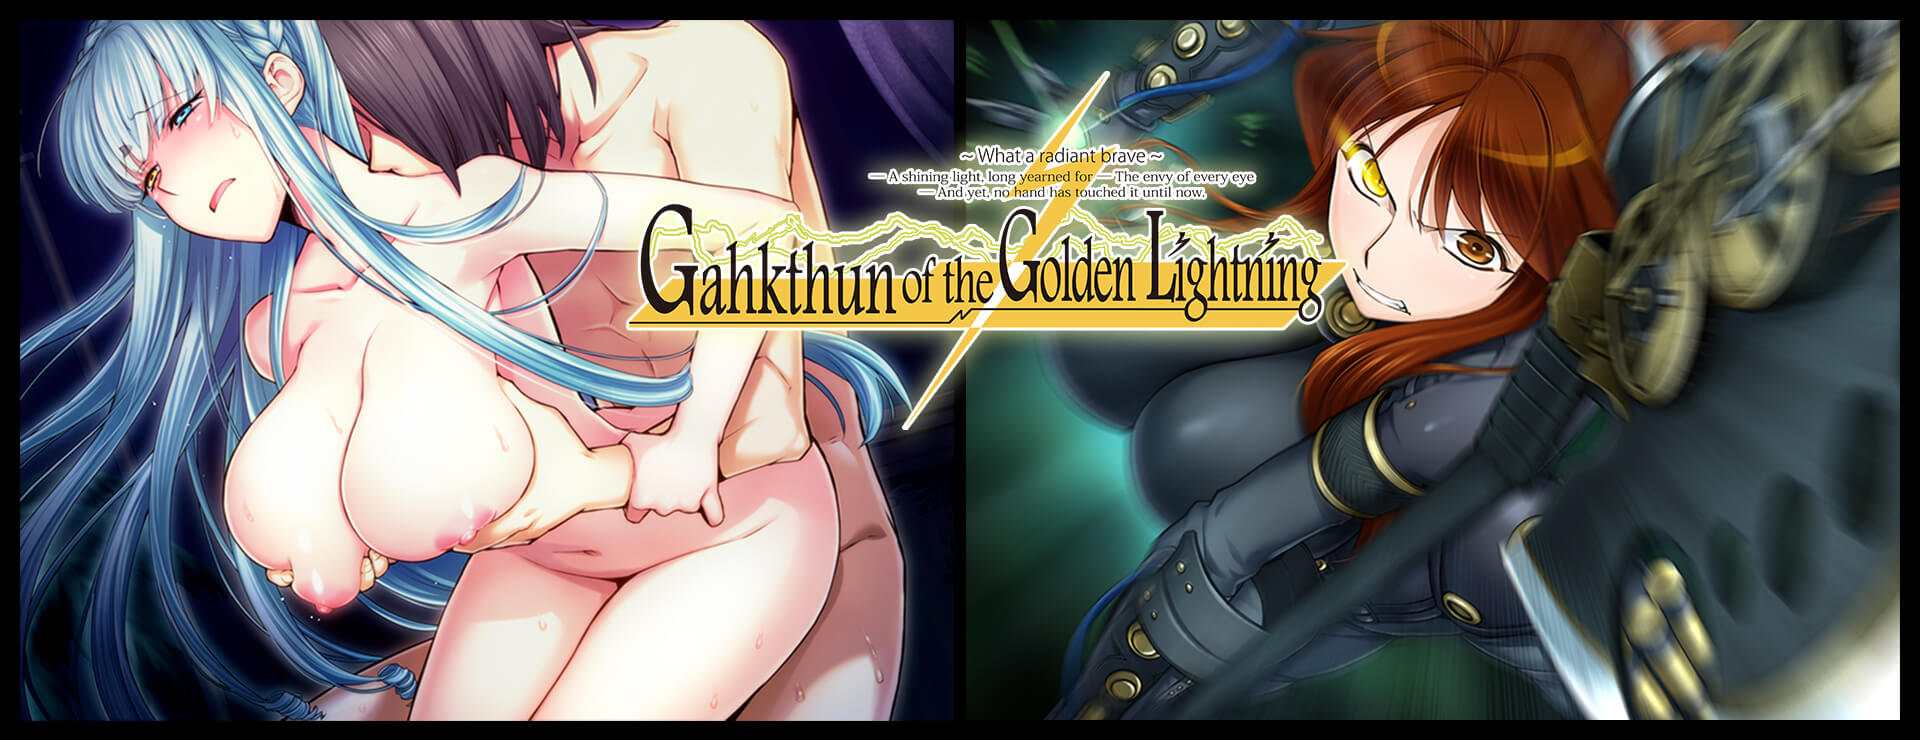 Gahkthun of the Golden Lightning - Visual Novel Game